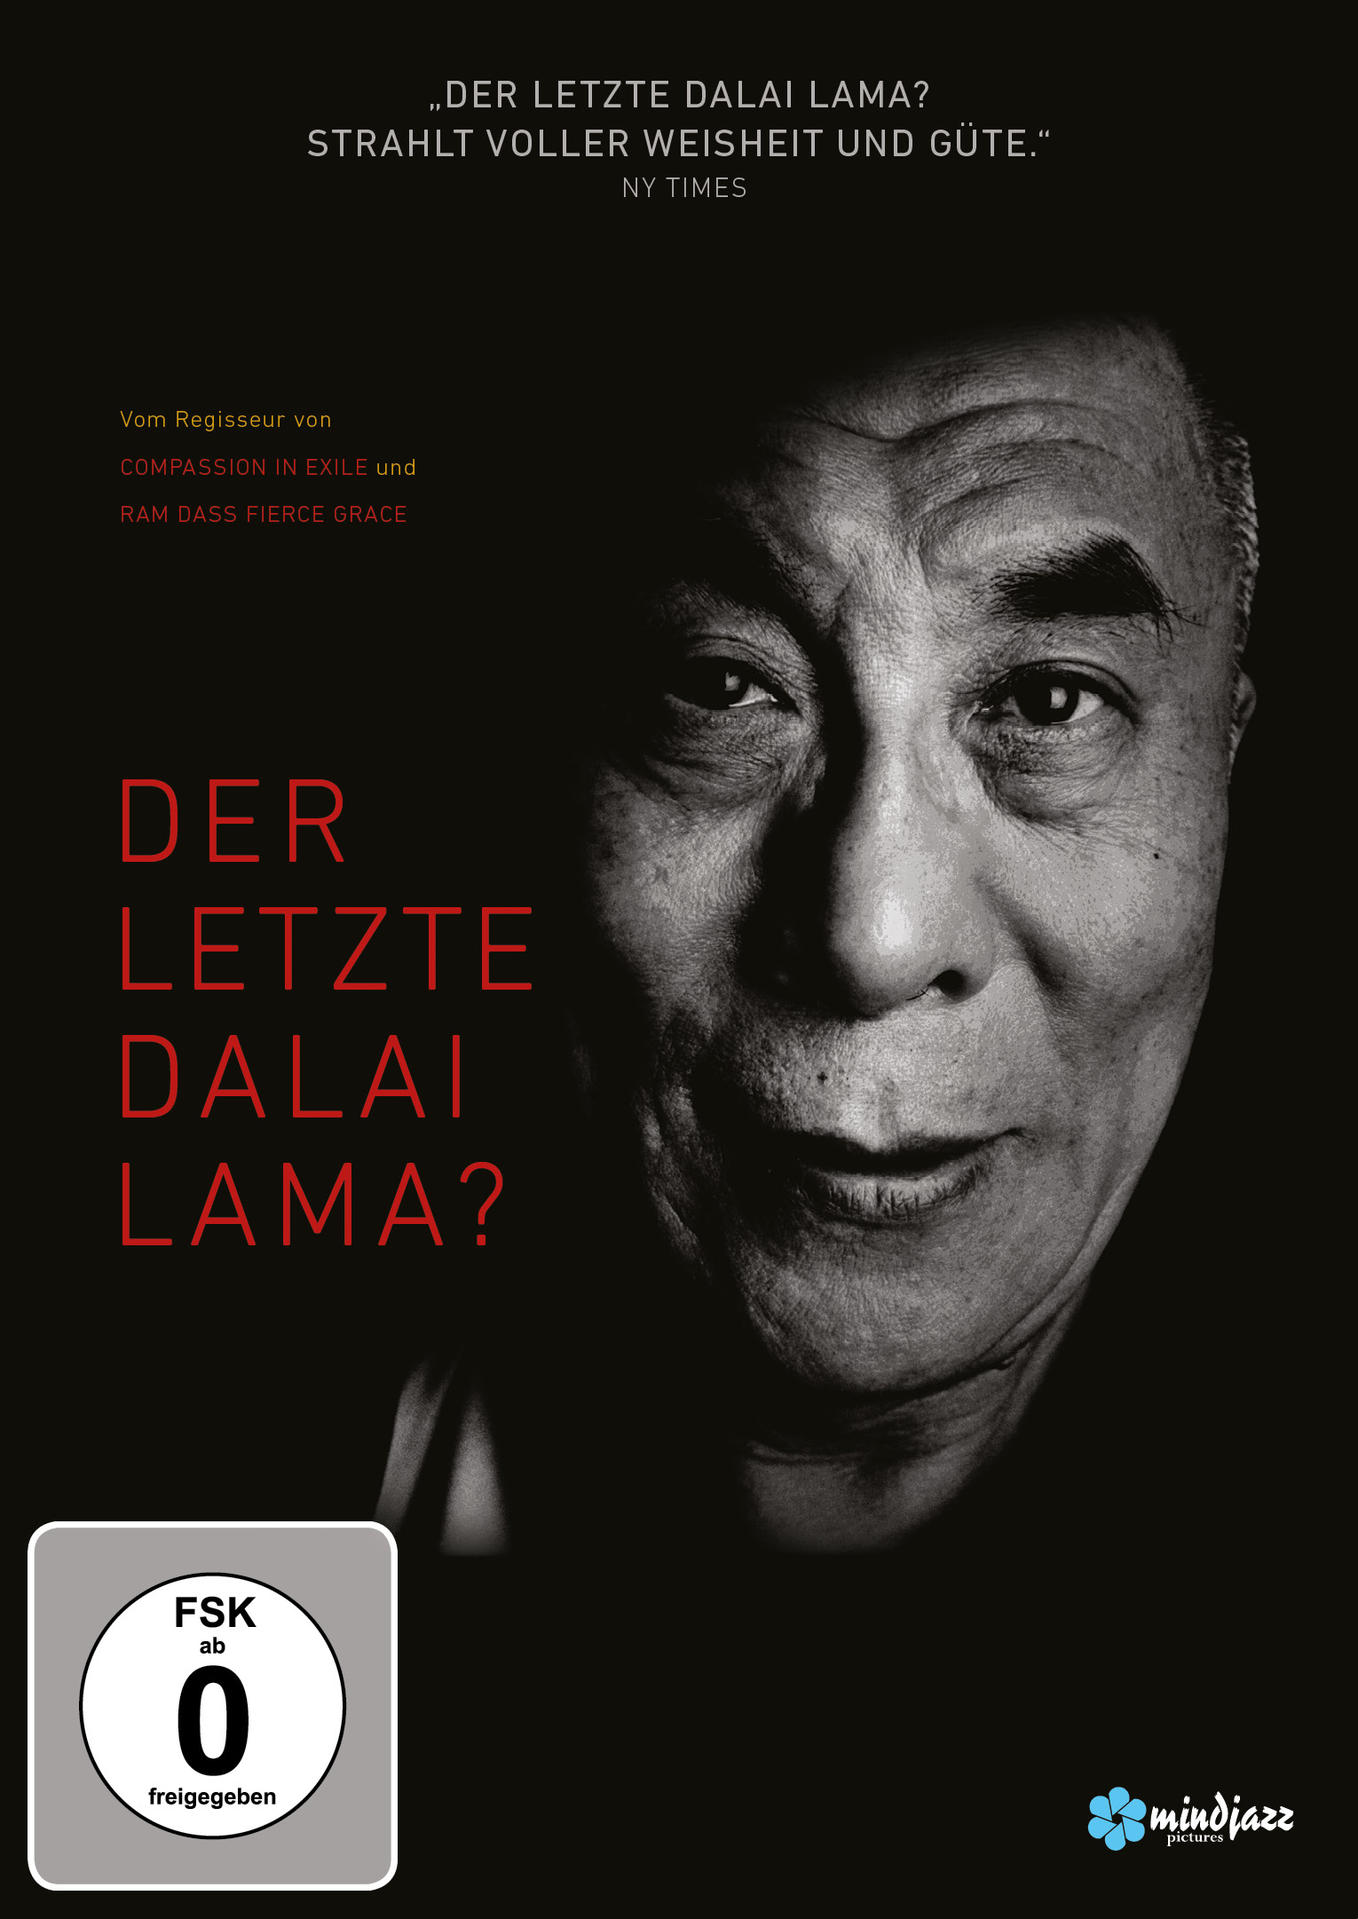 Dalai letzte - (DVD) Der Lama?